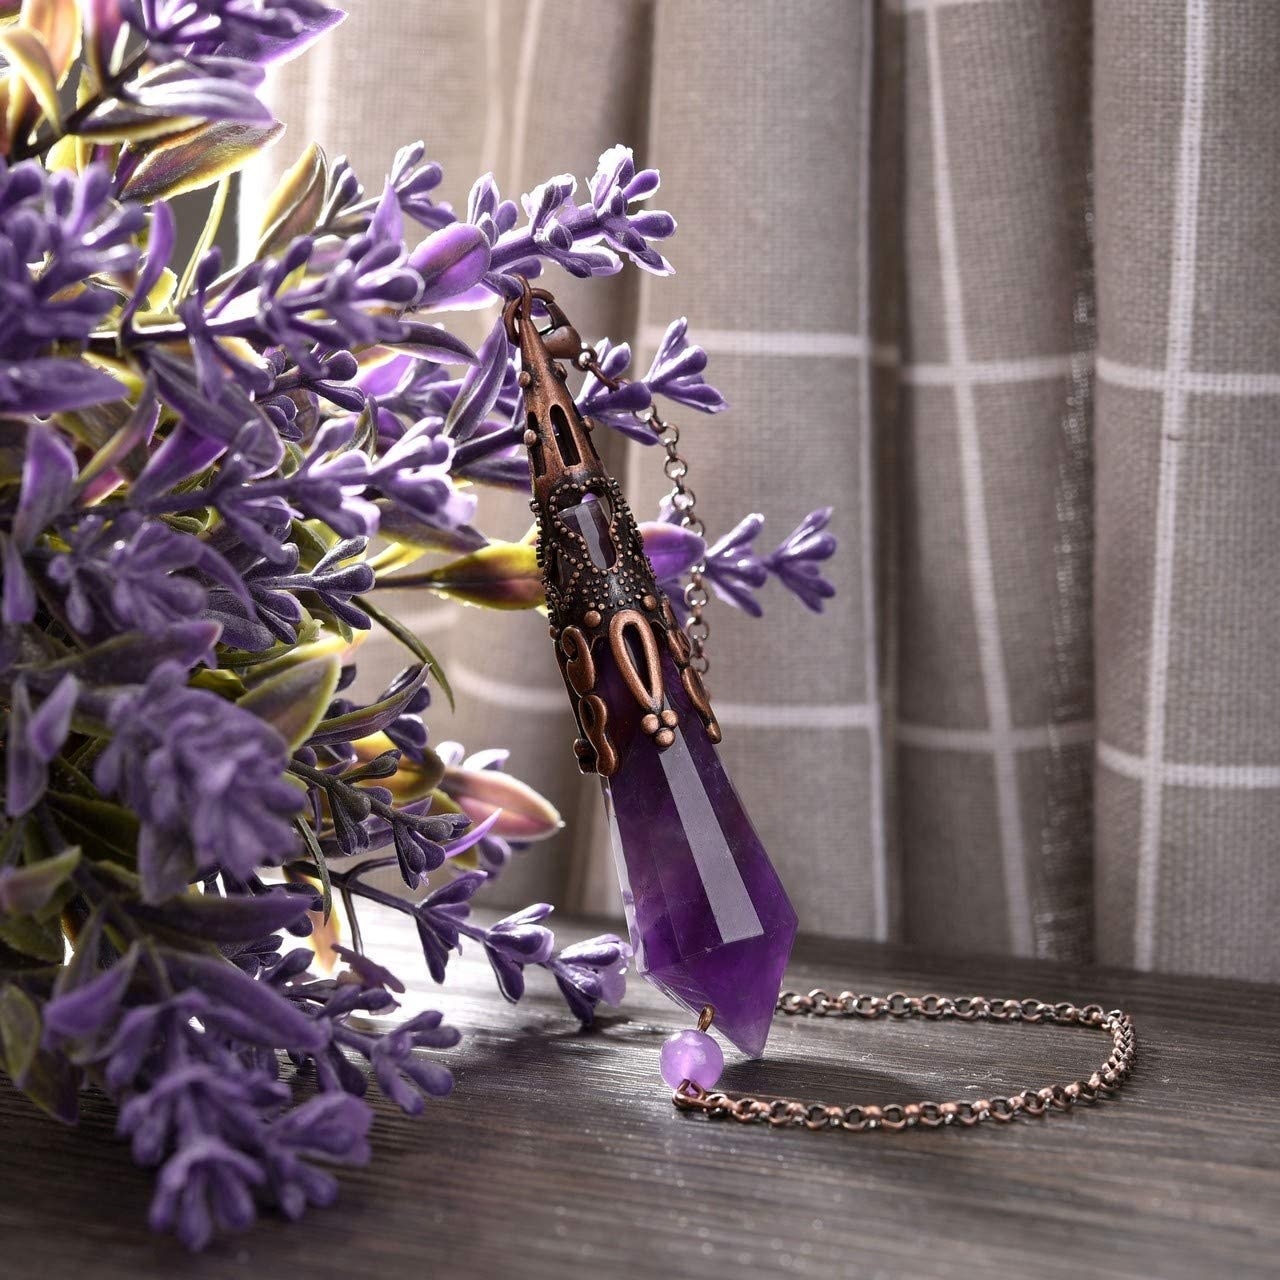 the amethyst divination pendulum displayed against lavender 